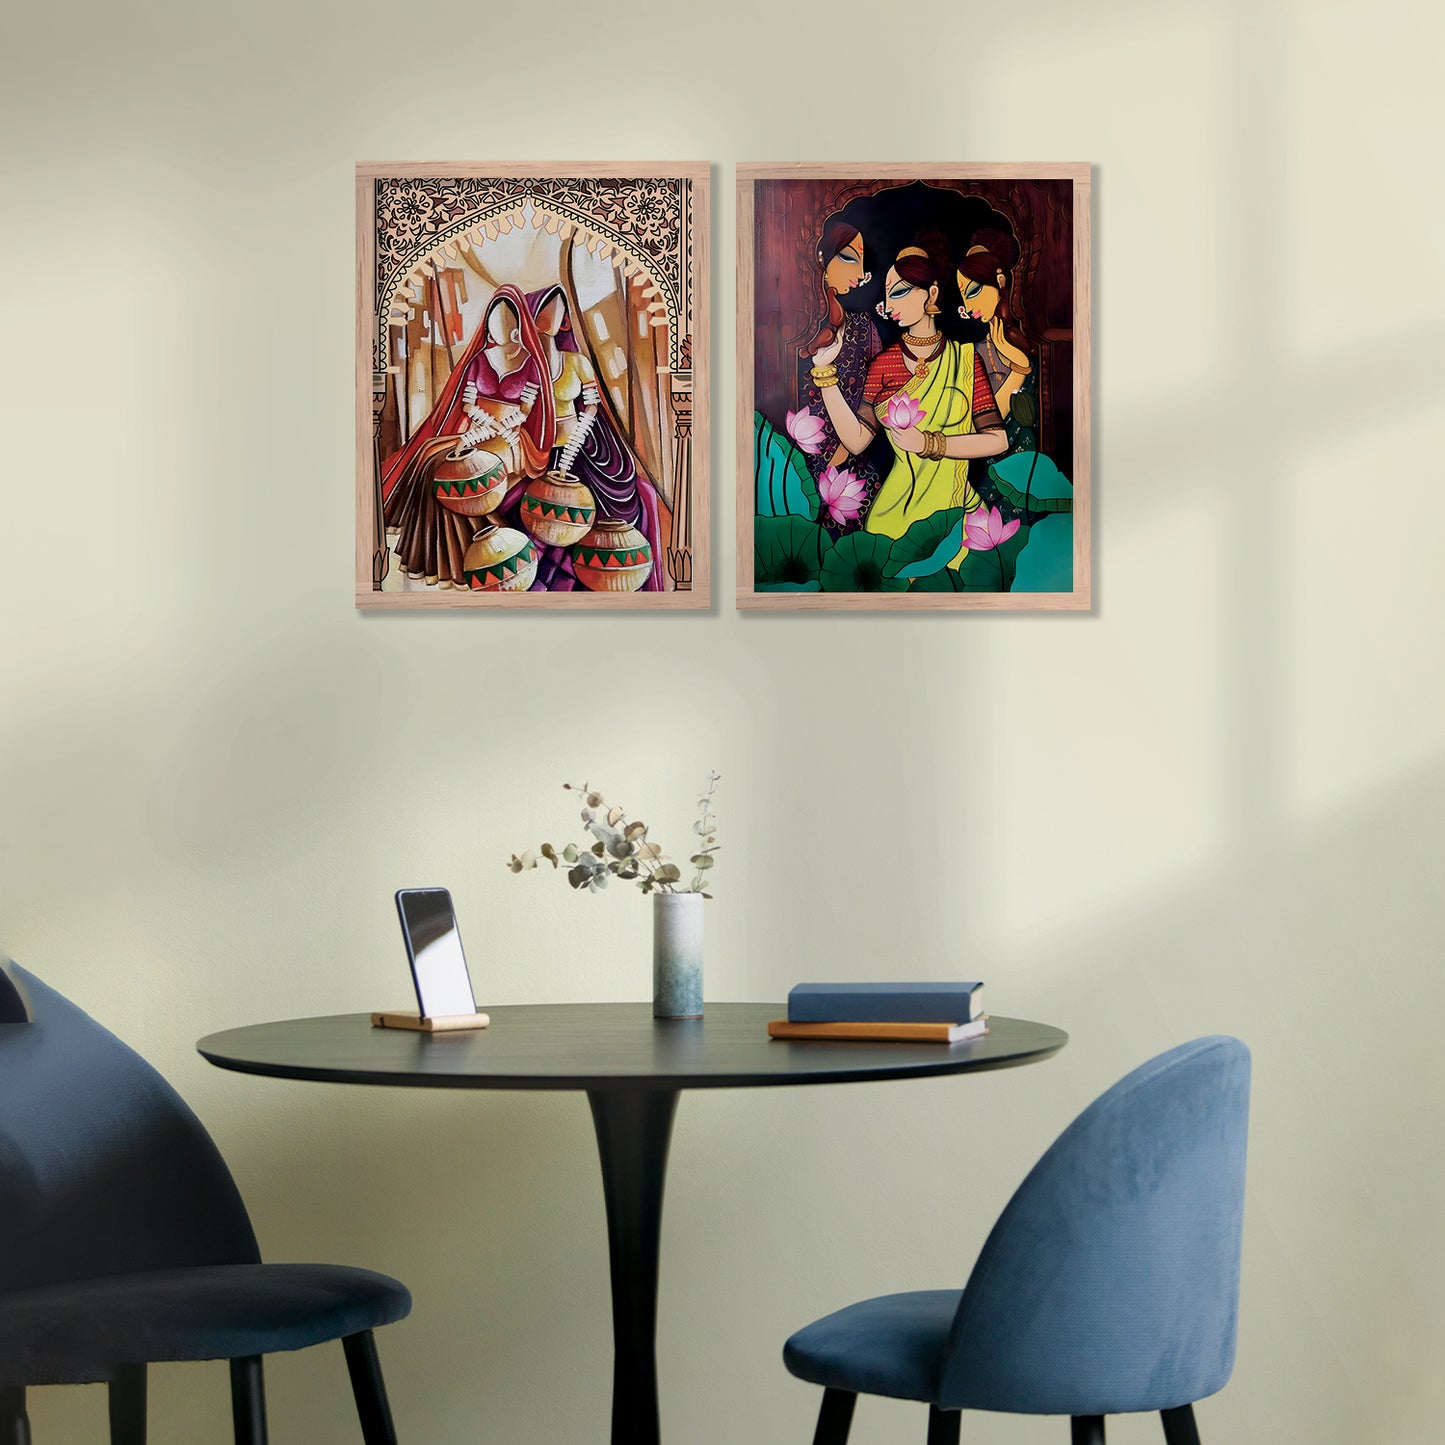 Madhubani Art Combo for Living Room Bedroom Home an Office Wall Decor